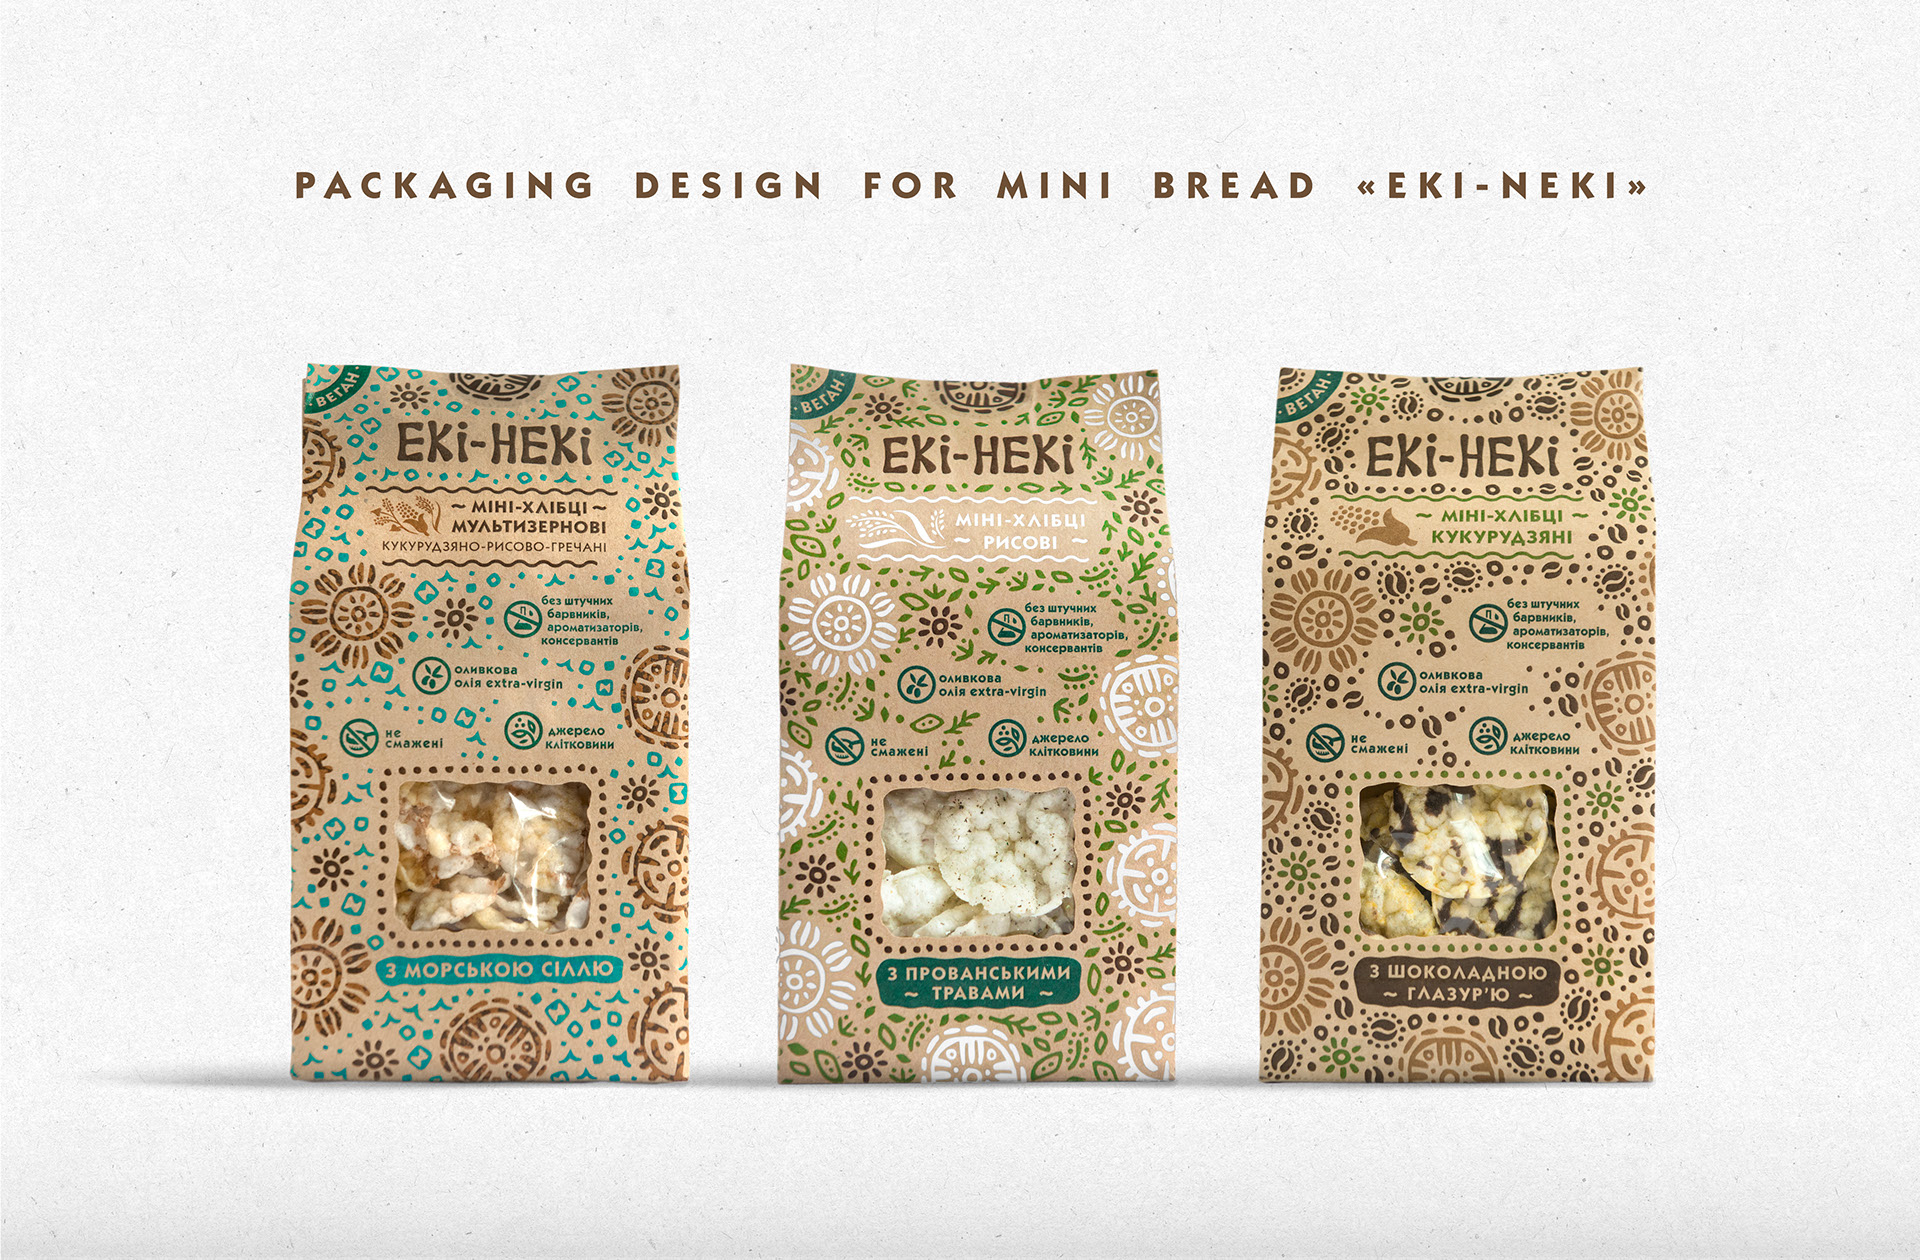 Packaging design for healthy snack Eki-neki